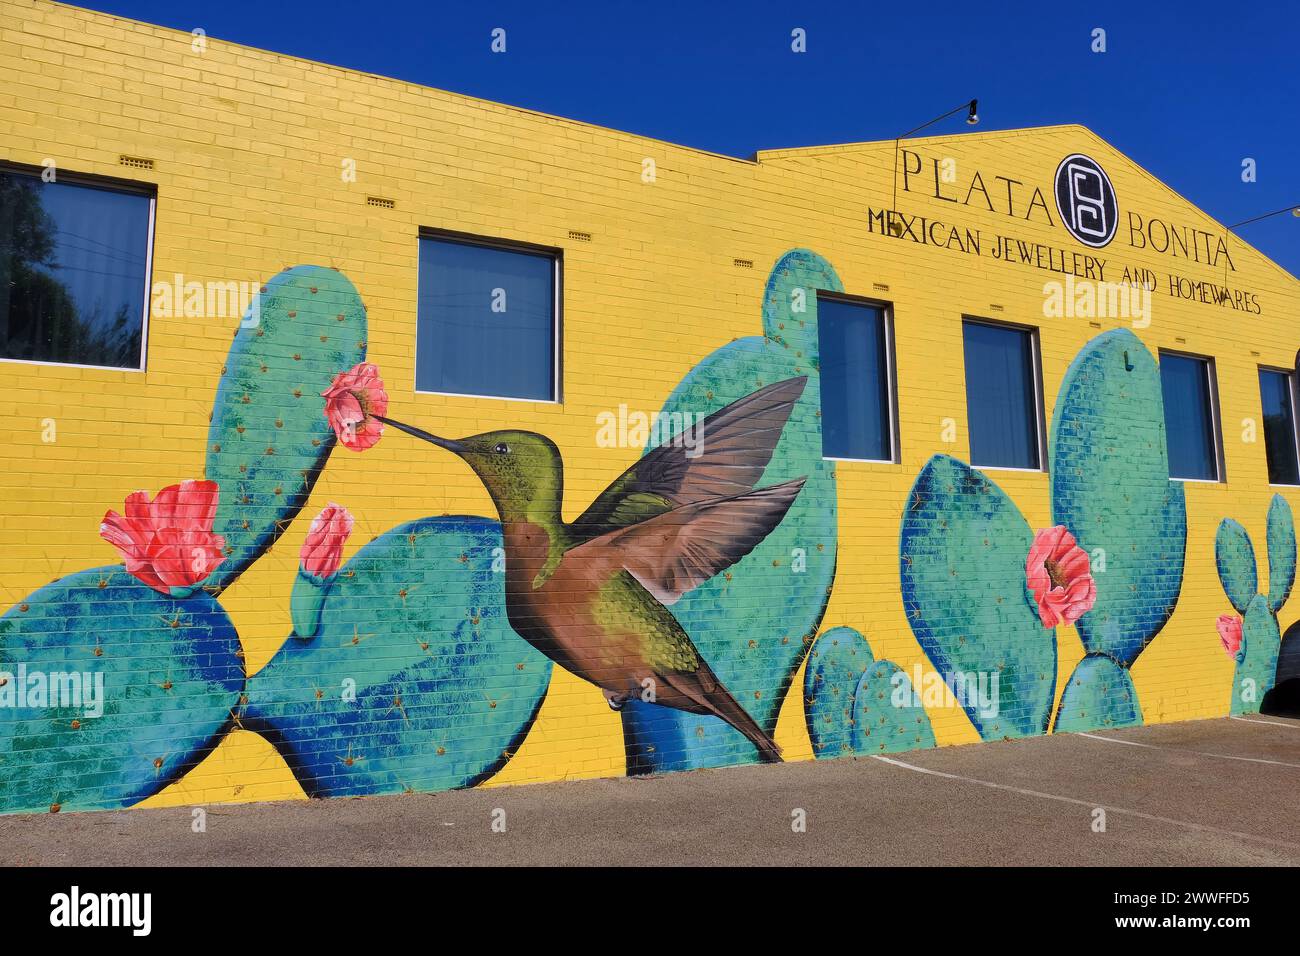 Colourful wall art on Plata Bonita Mexican Jewellery and Homewares building, North Fremantle, Perth, Western Australia Stock Photo